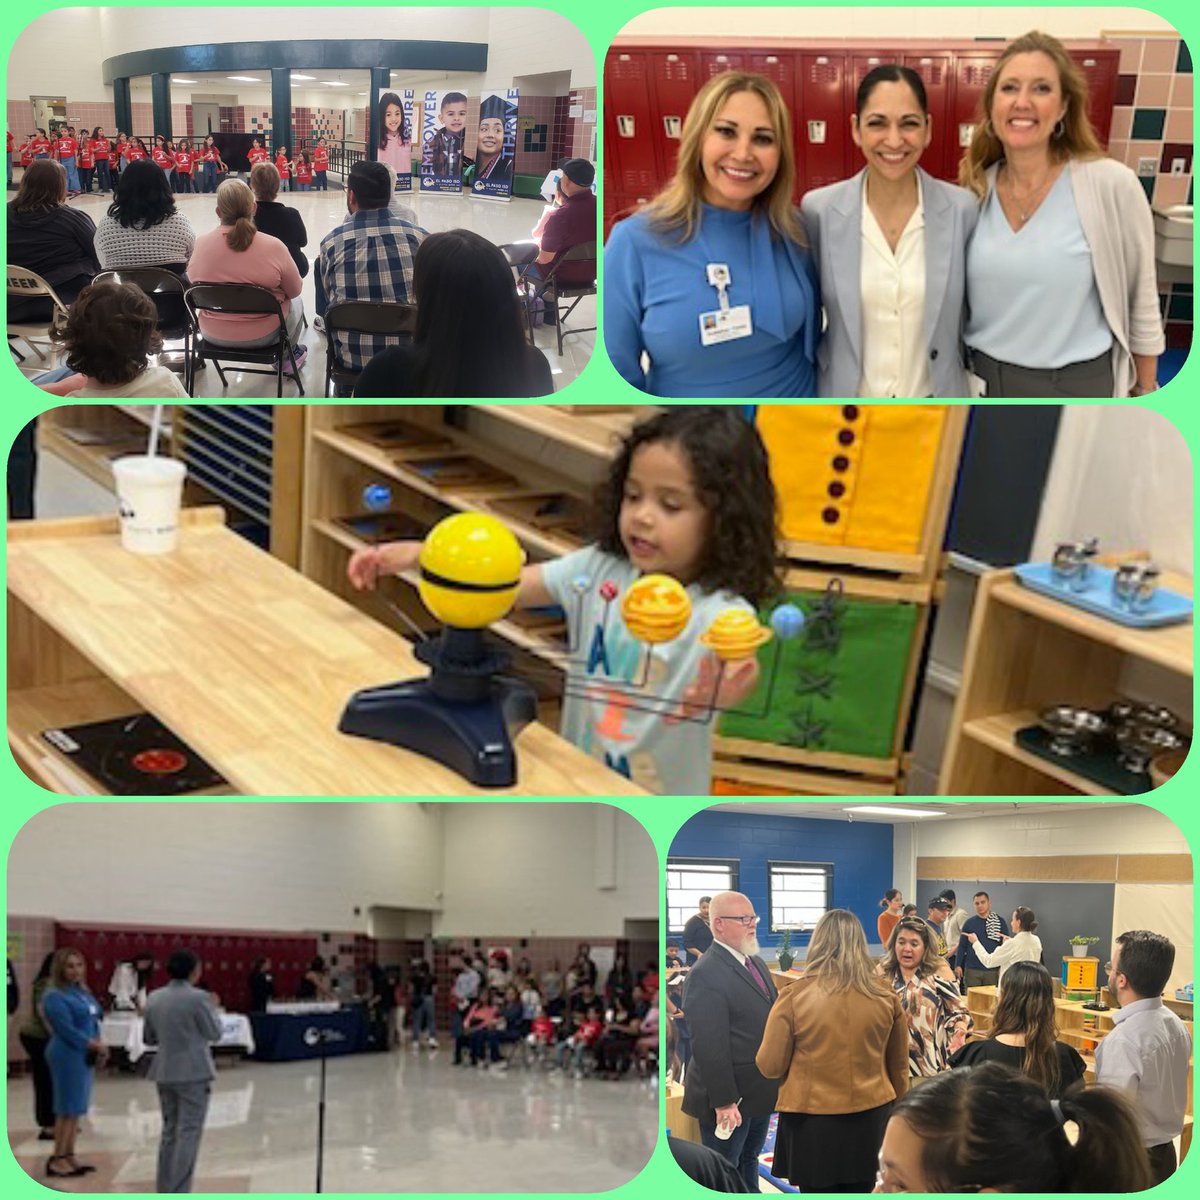 Honored to open Dr. Green doors to Montessori. Parents were thrilled to visit the model classroom and celebrated this grand opening. @Al_Garcia_EPISD @ELPASO_ISD @MRomero_EPISD #EPISD @reynahustles @SCalzada08 @DsayavedraEPISD @EPISD_COTE @MCarmona_EPISD